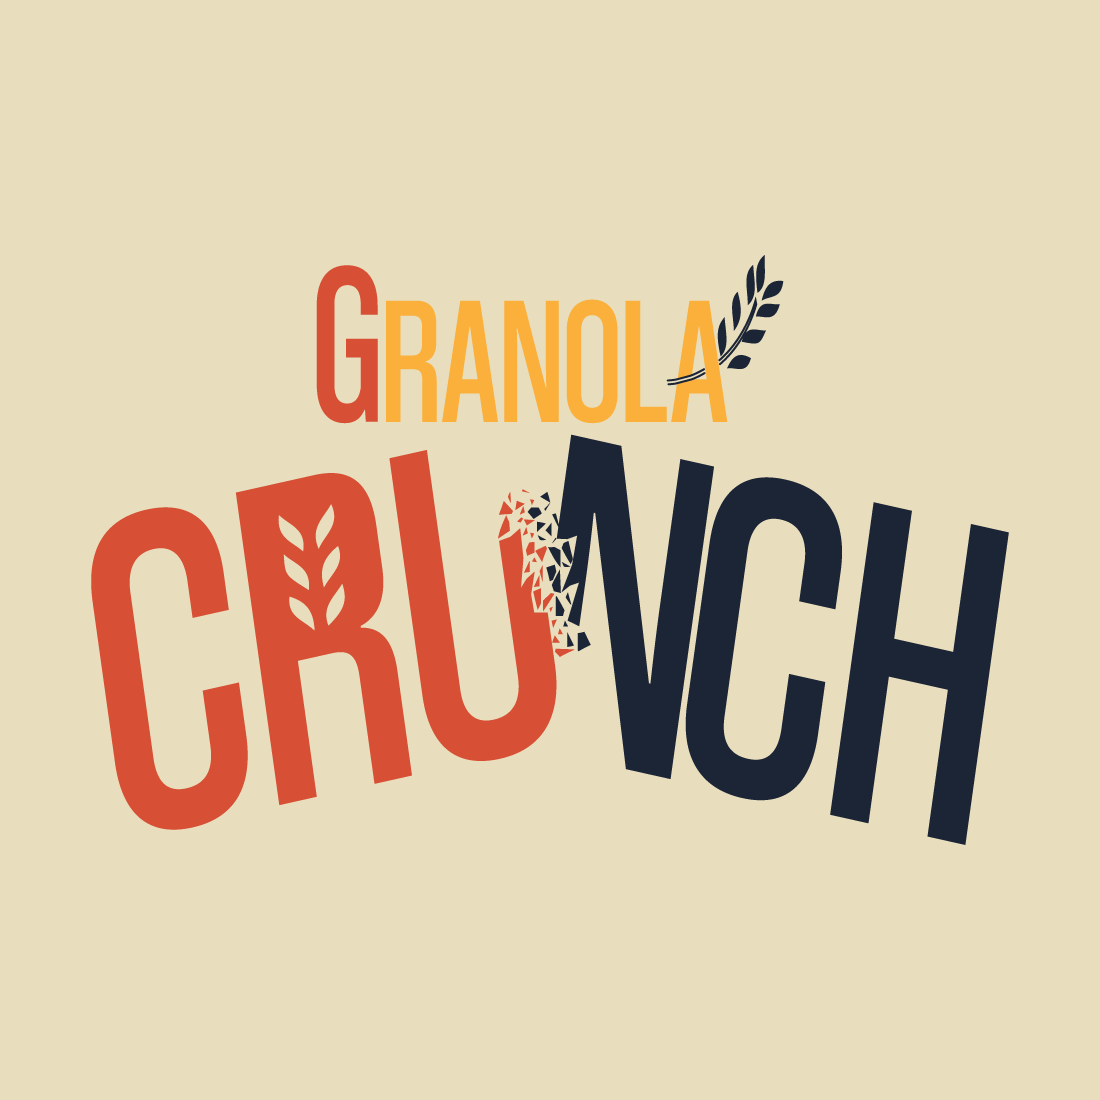 crunch4